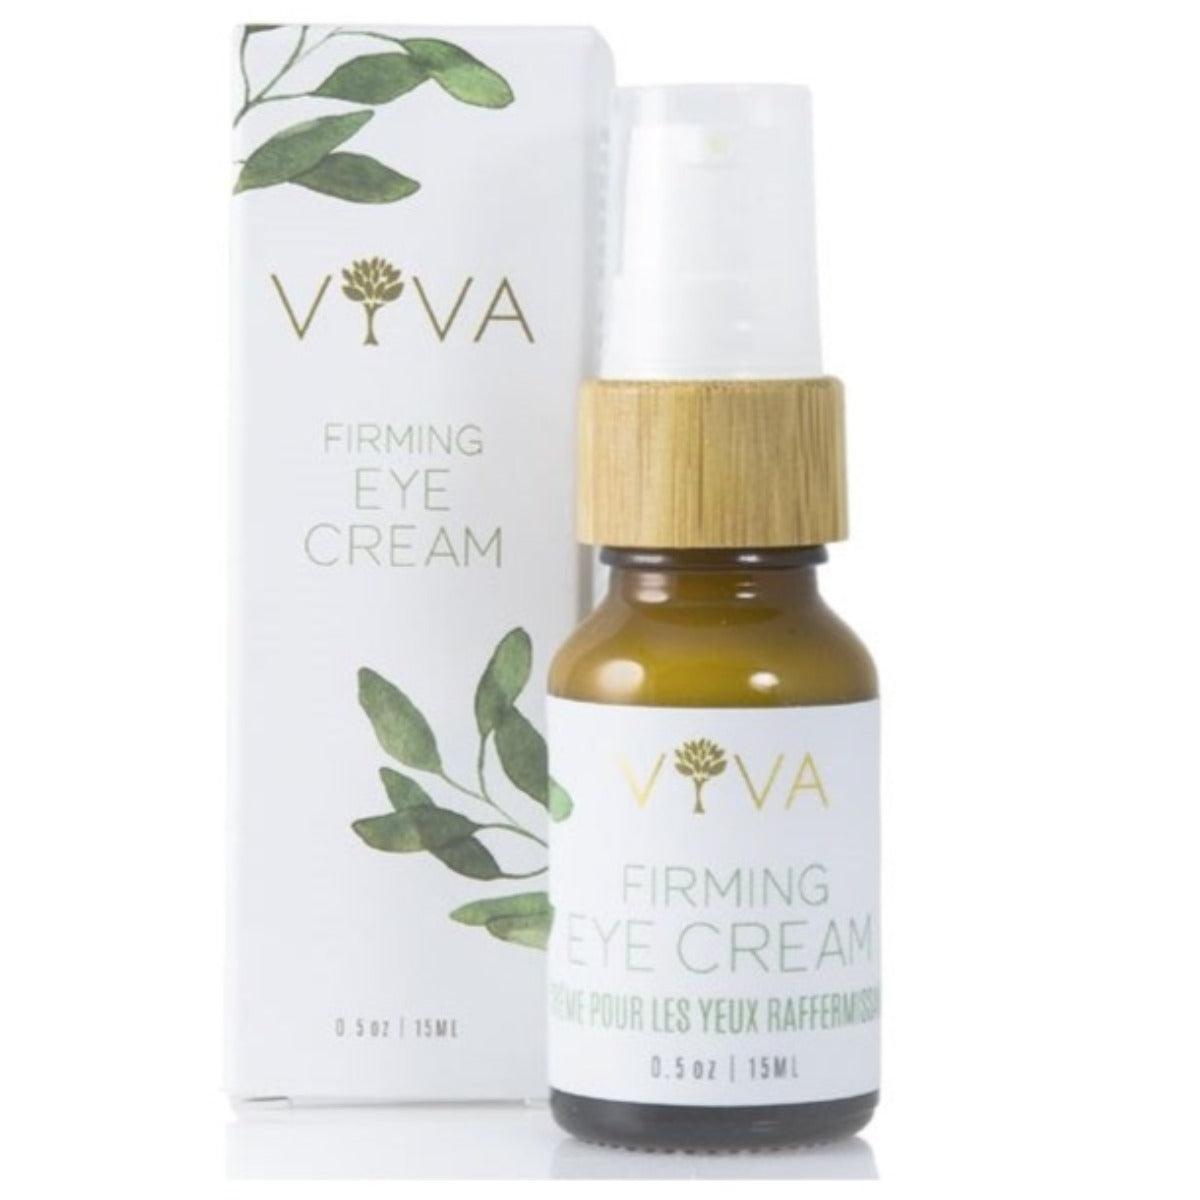 Viva Firming Eye Cream 15mL Face Moisturizer at Village Vitamin Store